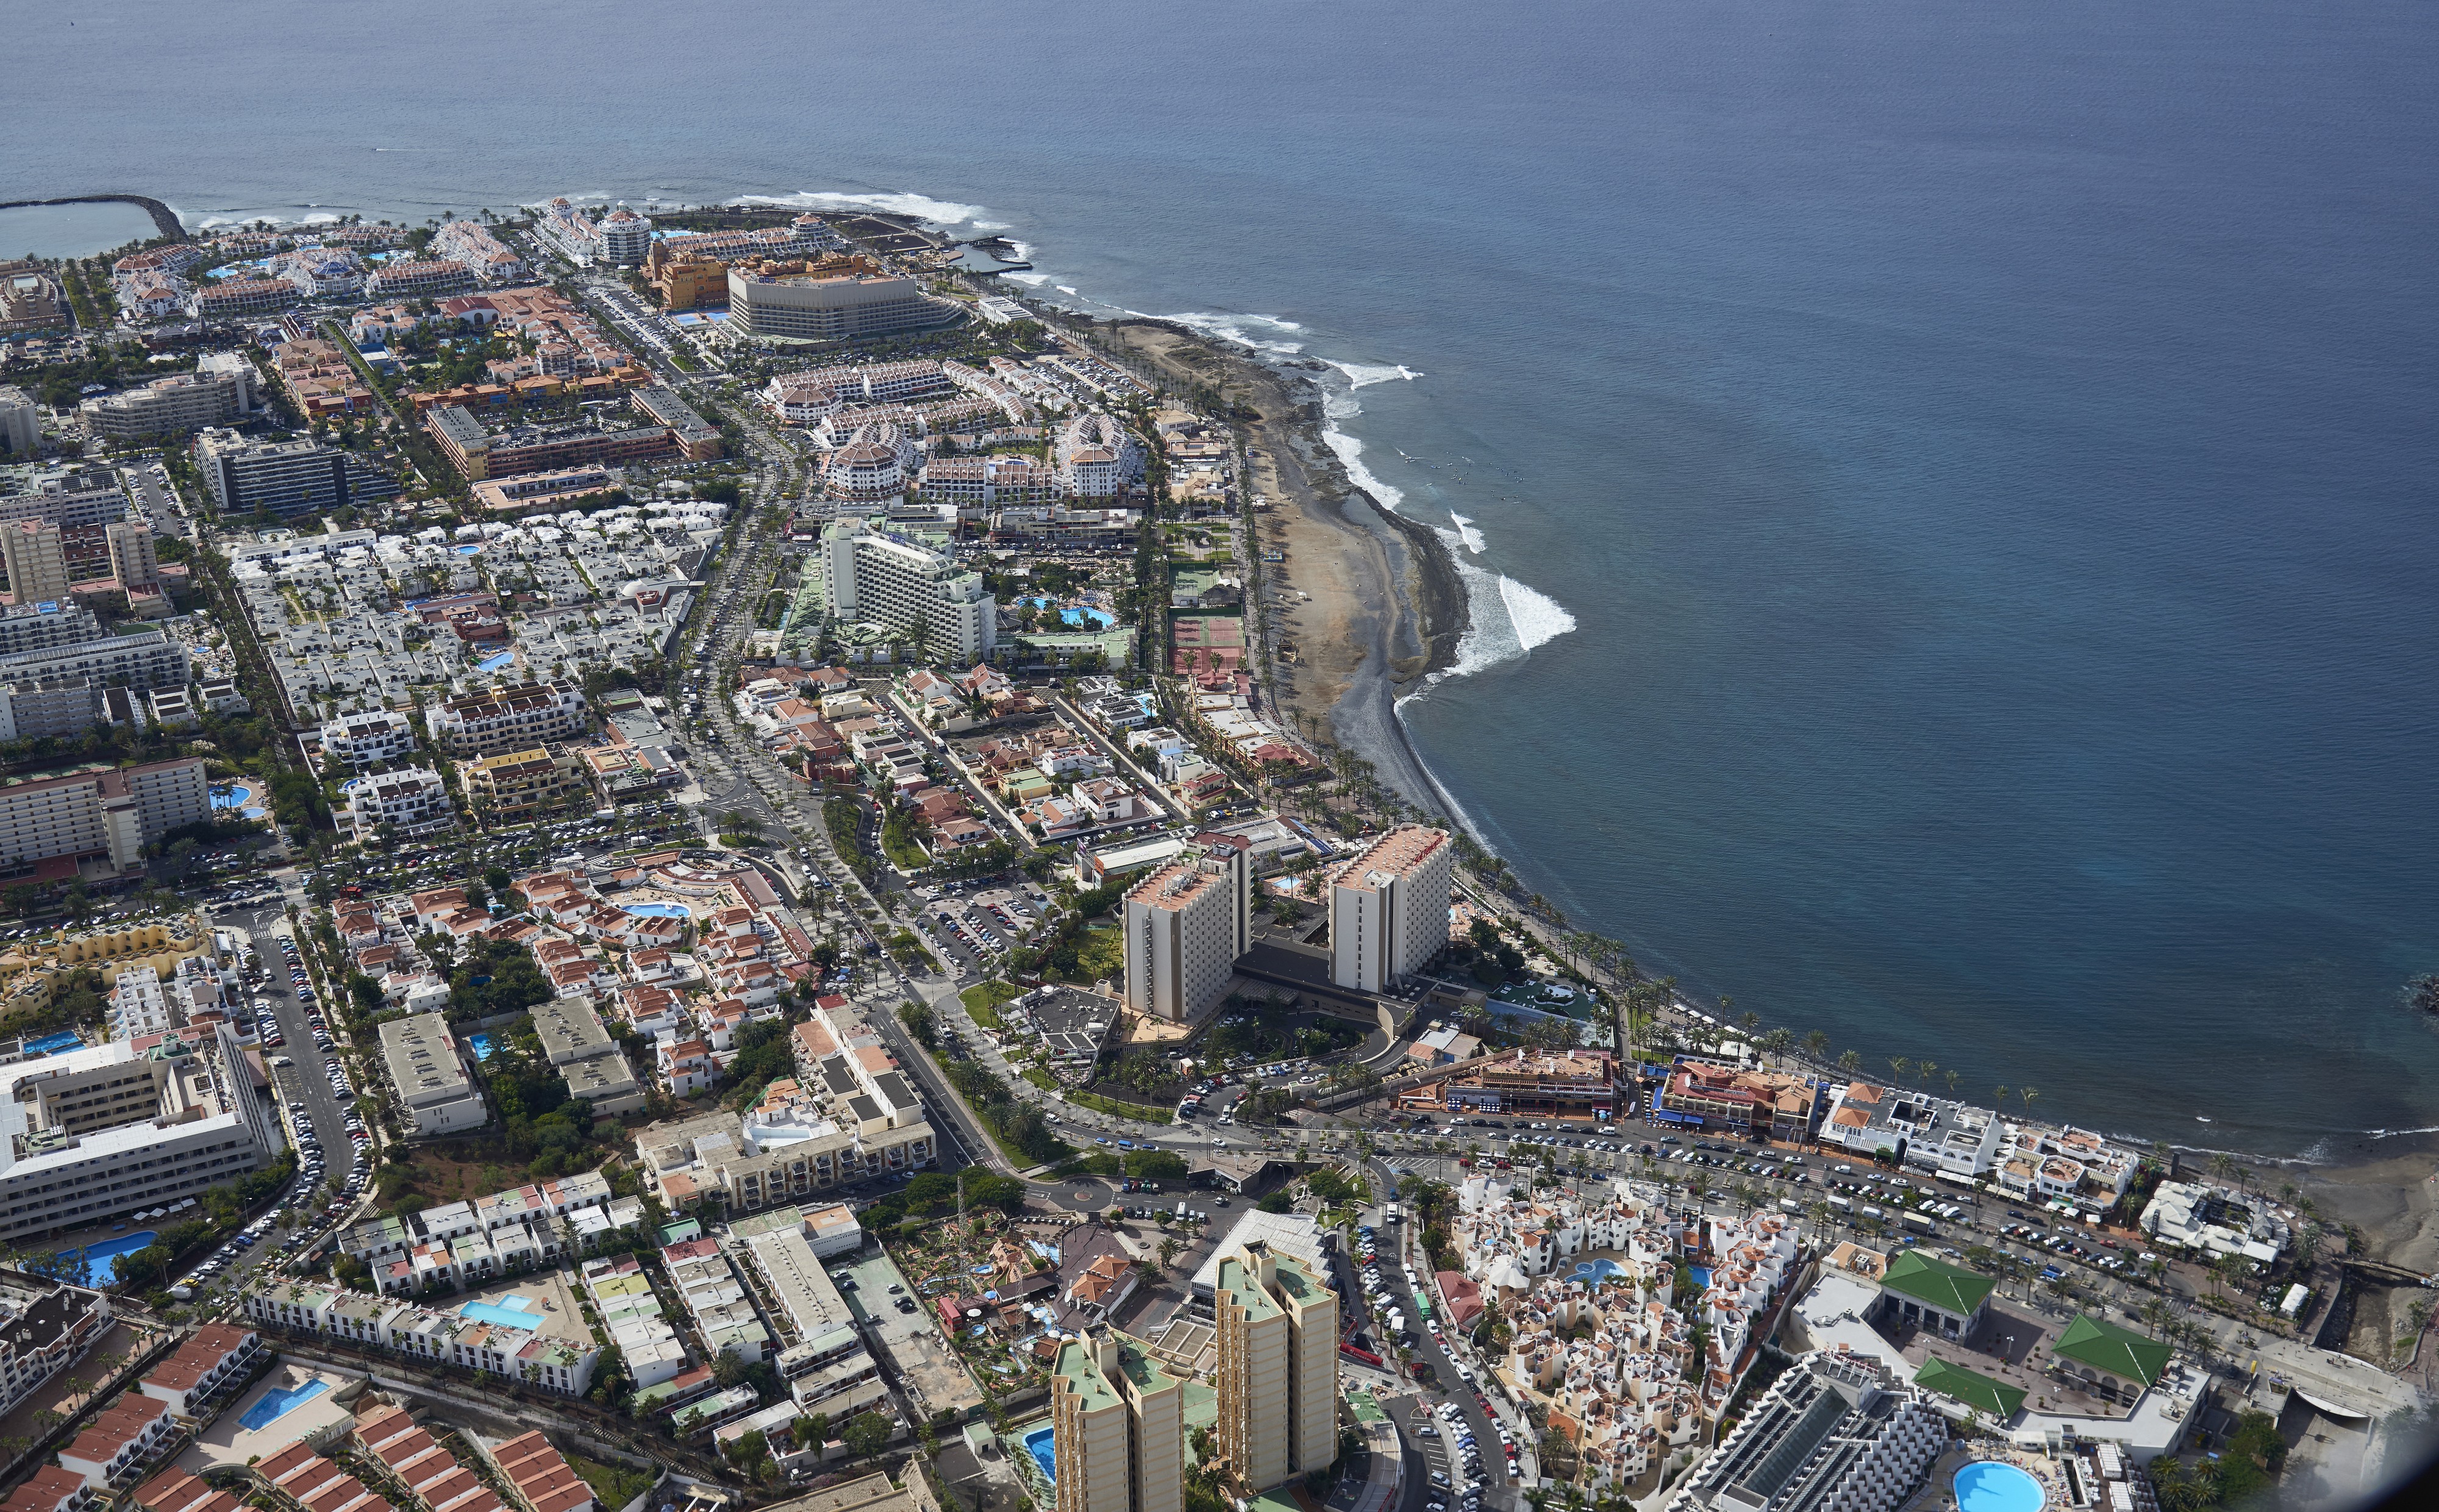 A0506 Tenerife, Playa de las Américas aerial view